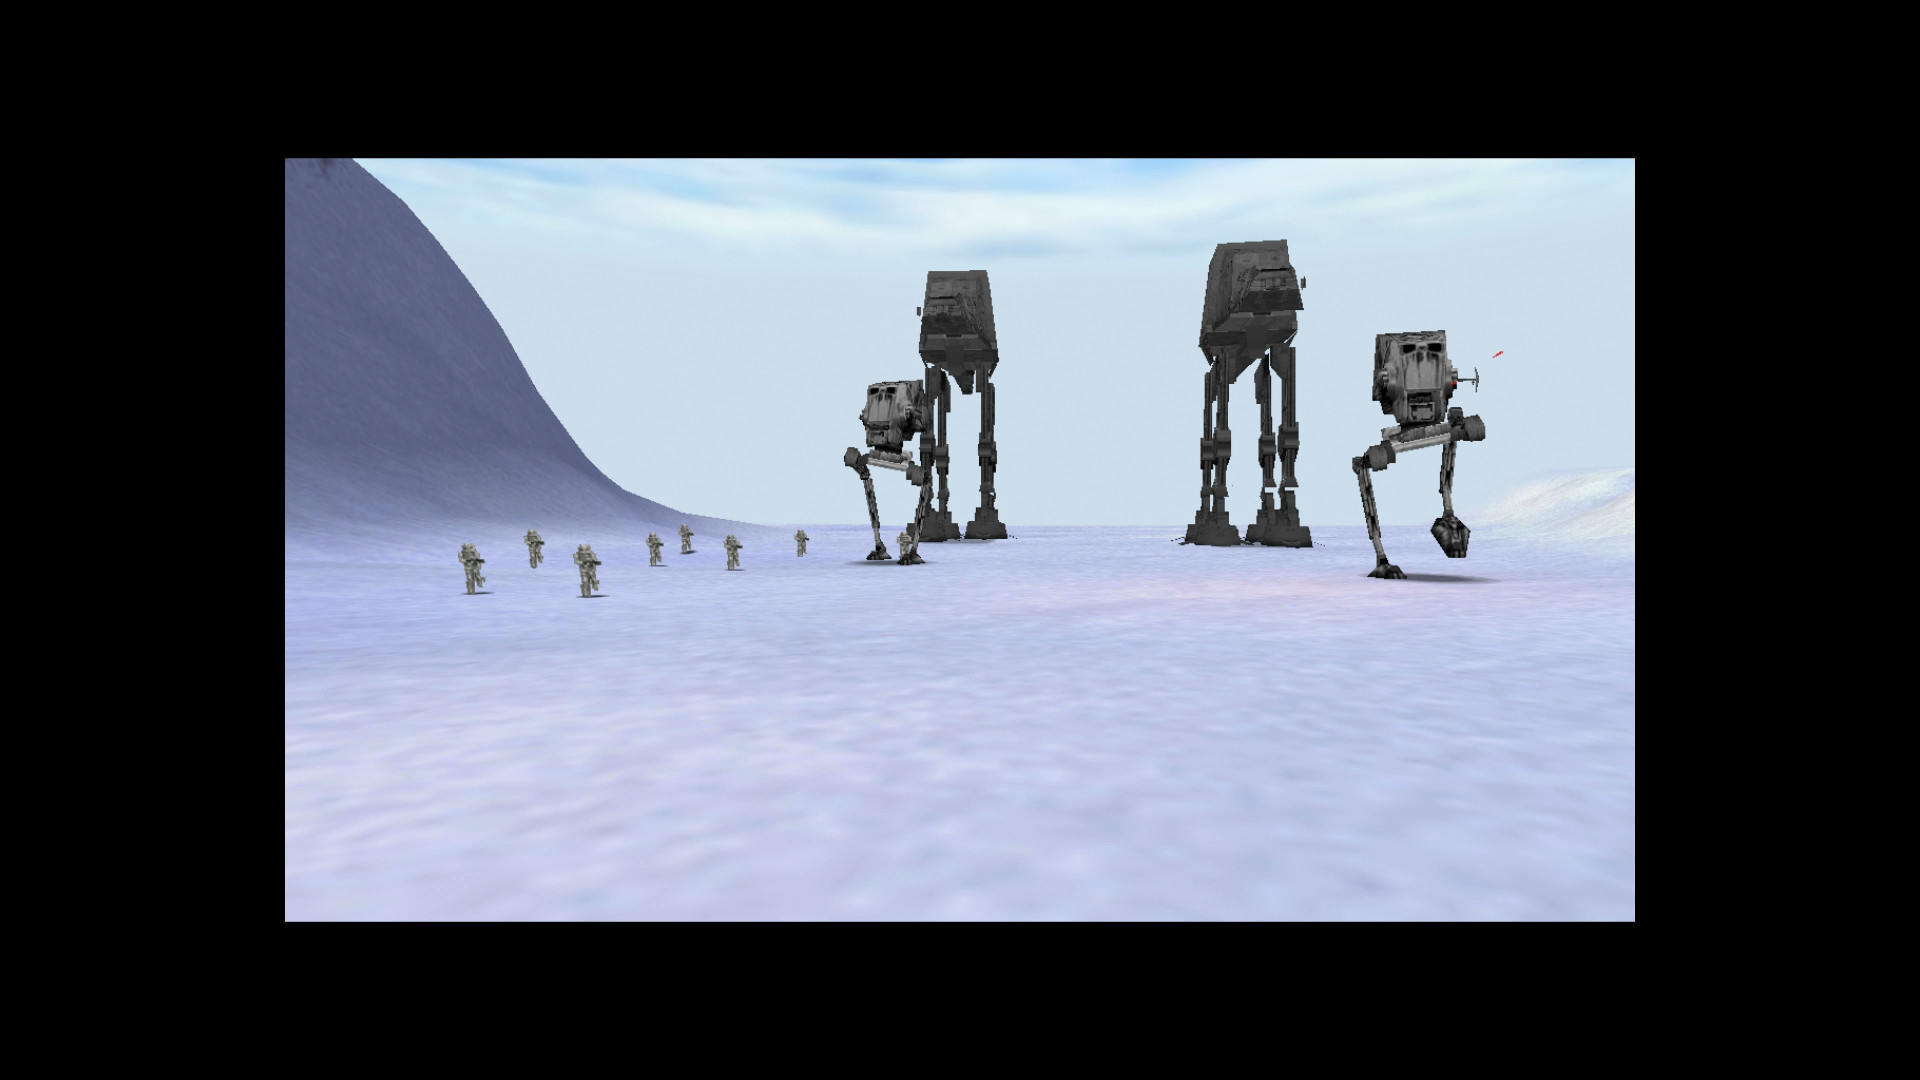 Star Wars Rogue Squadron 3D